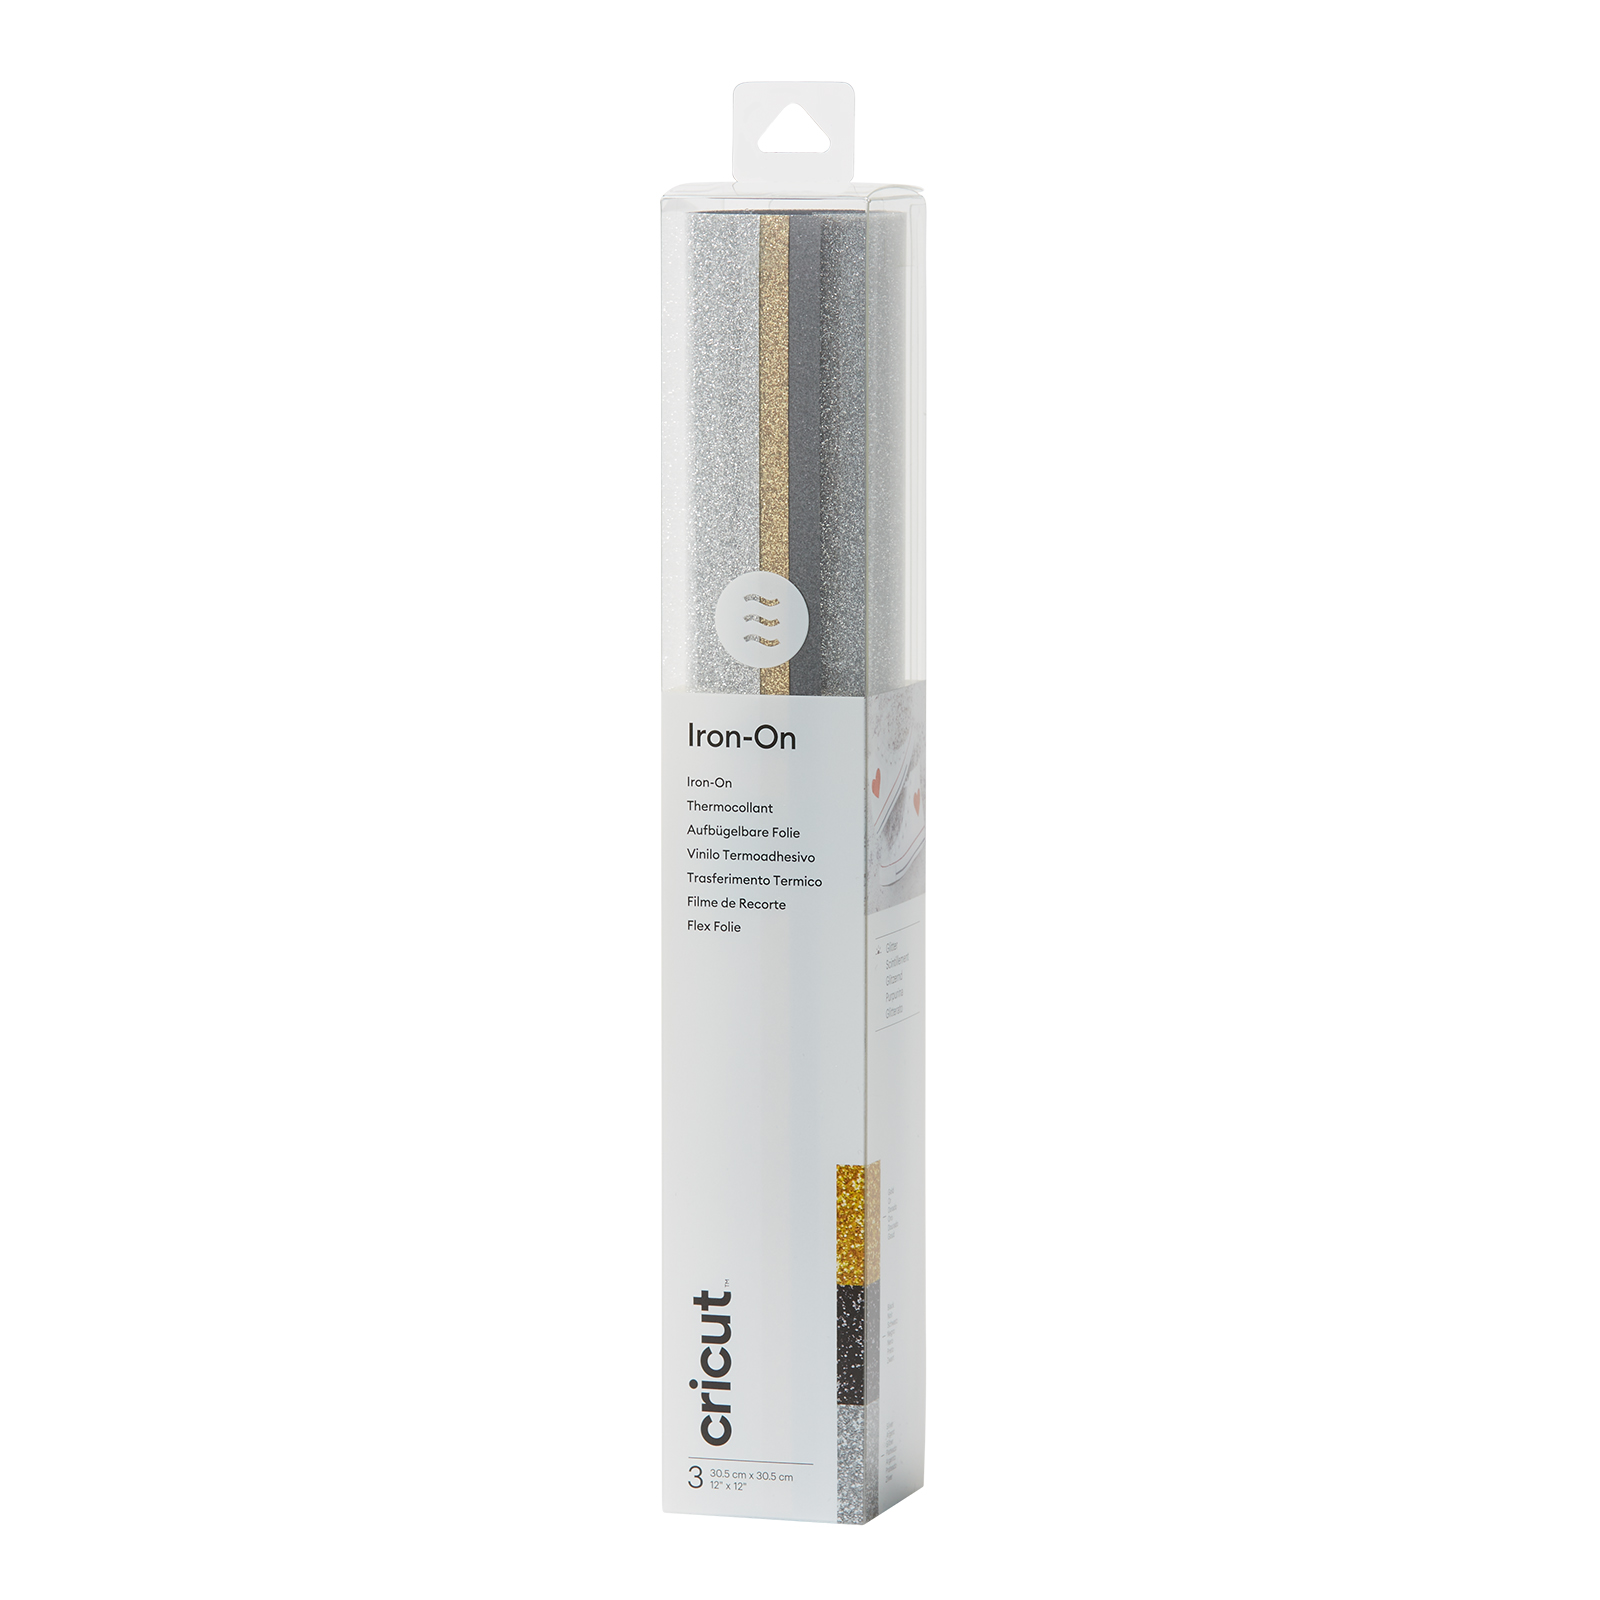 CRICUT - Film thermocollant Sampler 30.5 x 30.5 …